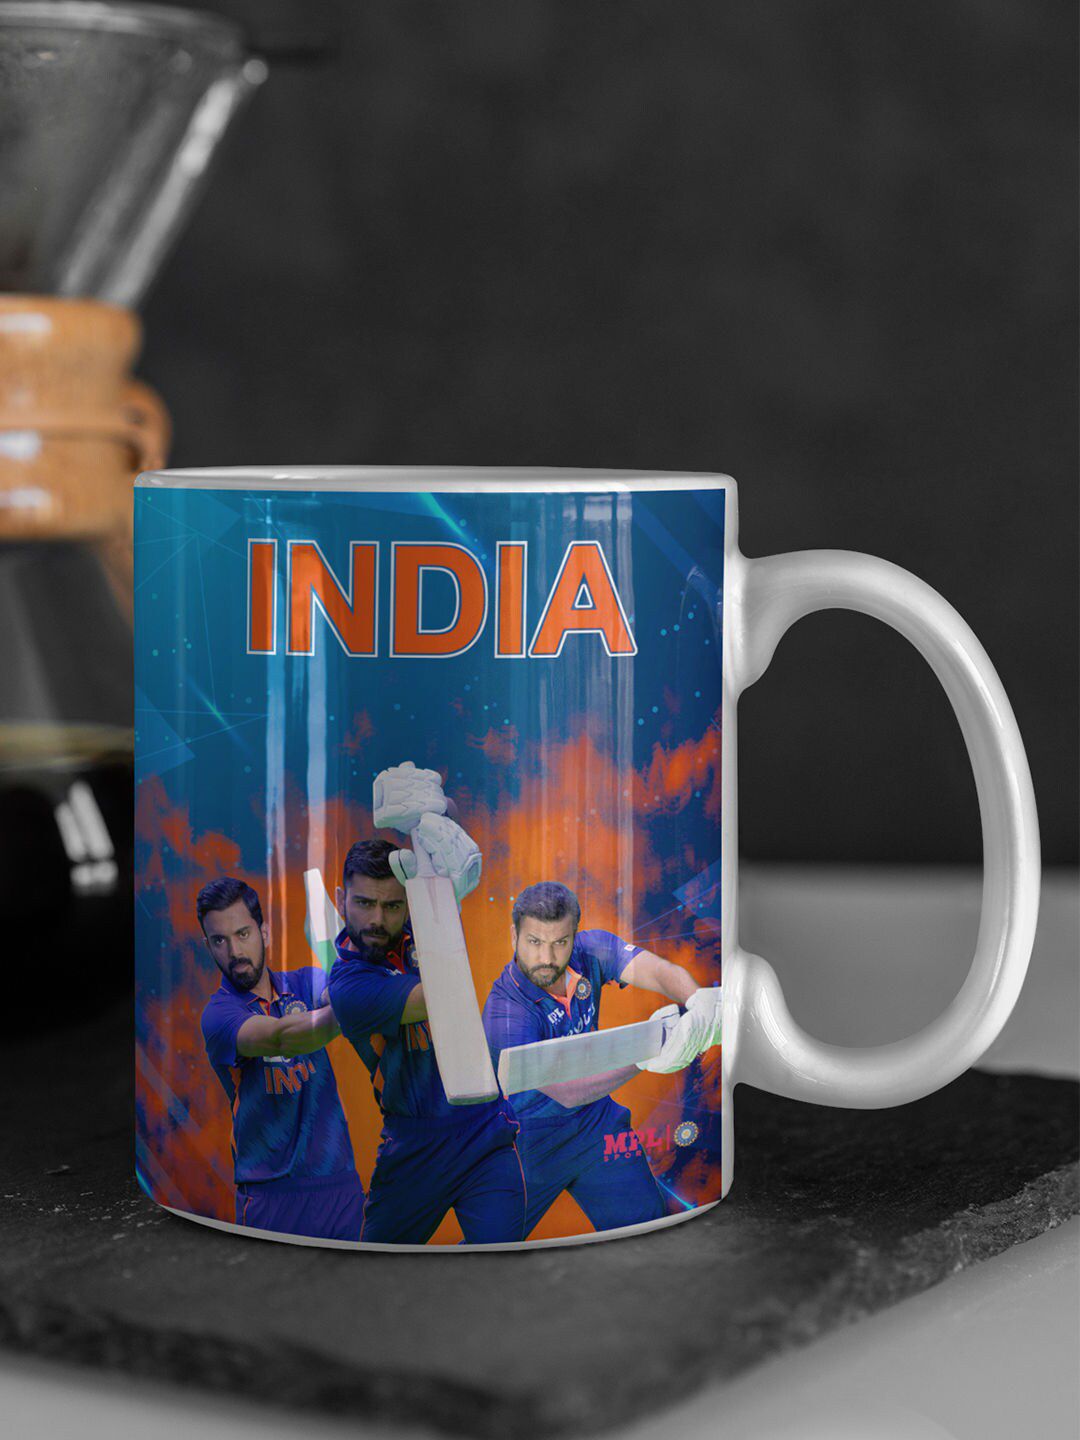 macmerise White & Blue Printed Ceramic Glossy Mug Price in India